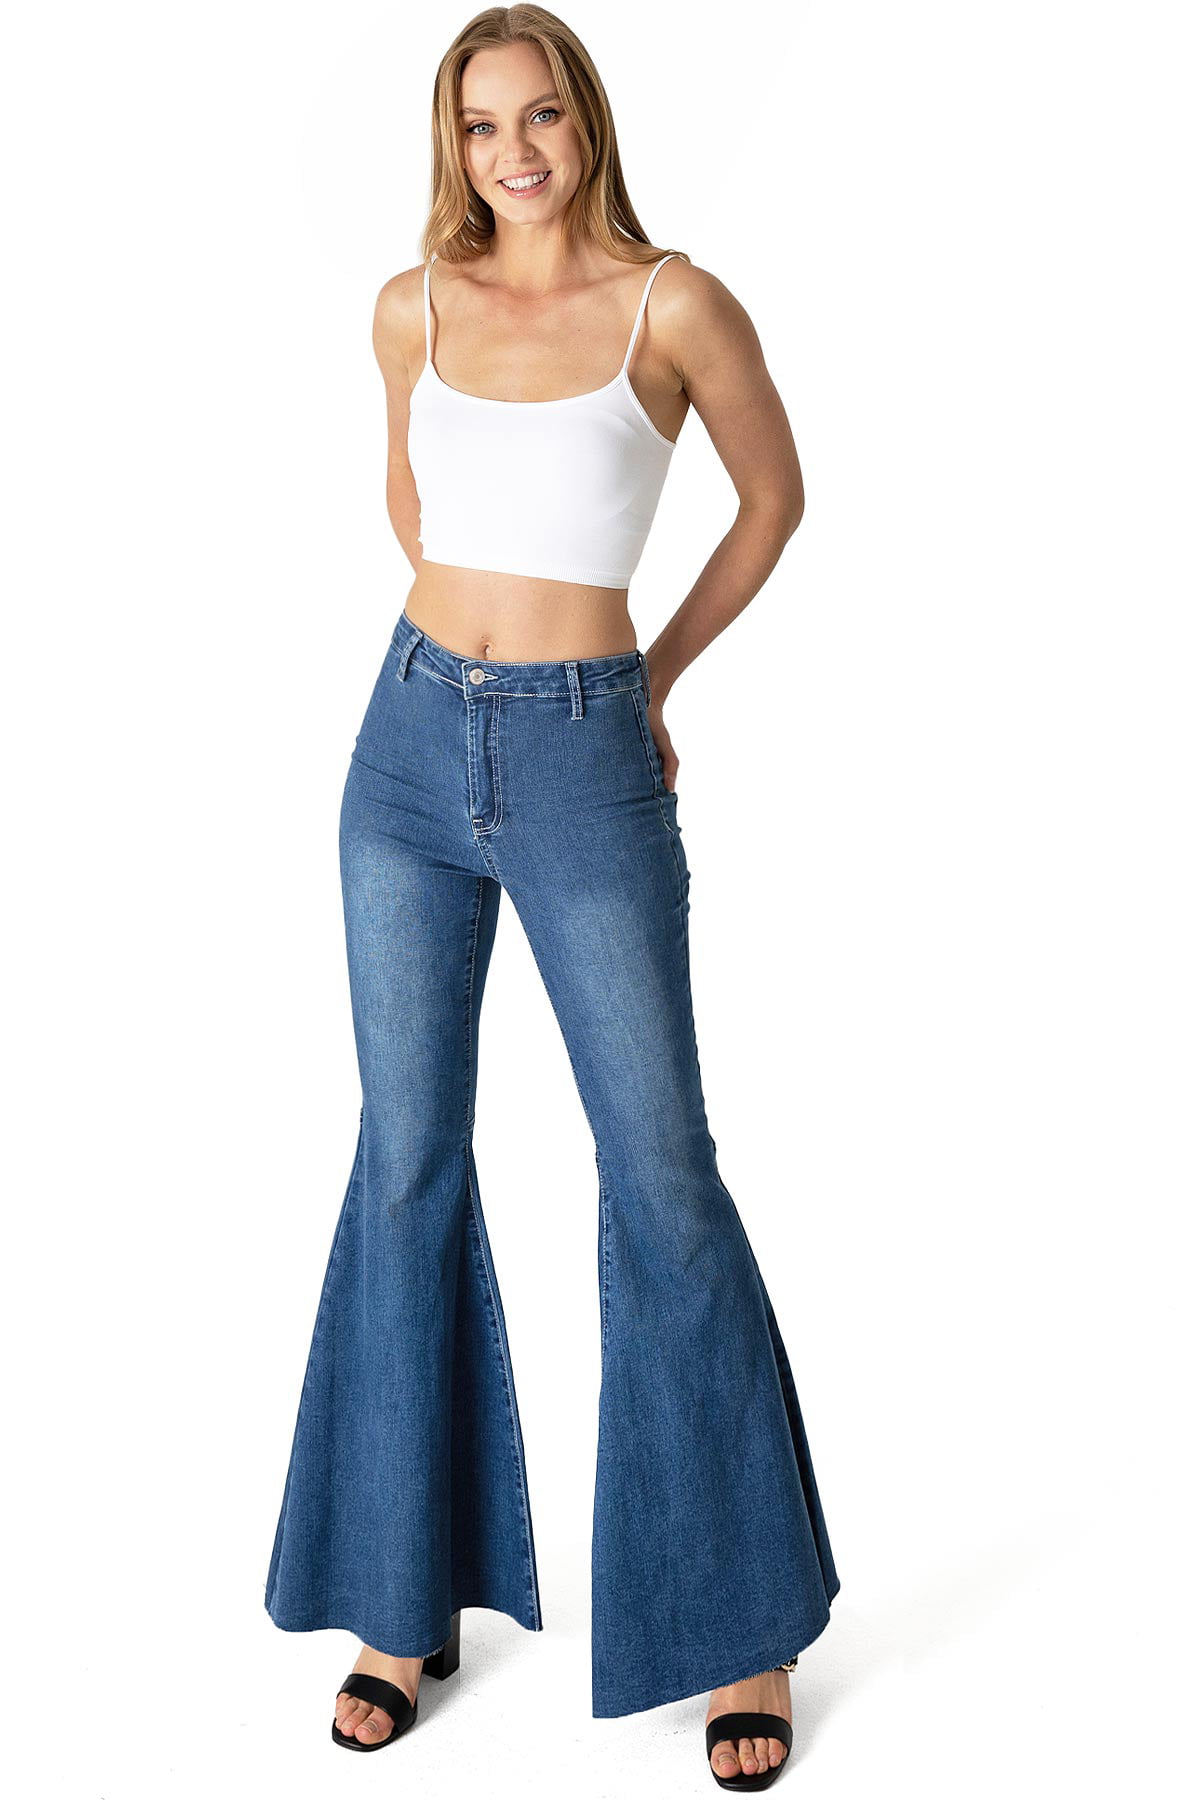 Tricot Womens High Rise Super Flare Bell Bottom Jeans (11, Medium Denim) 